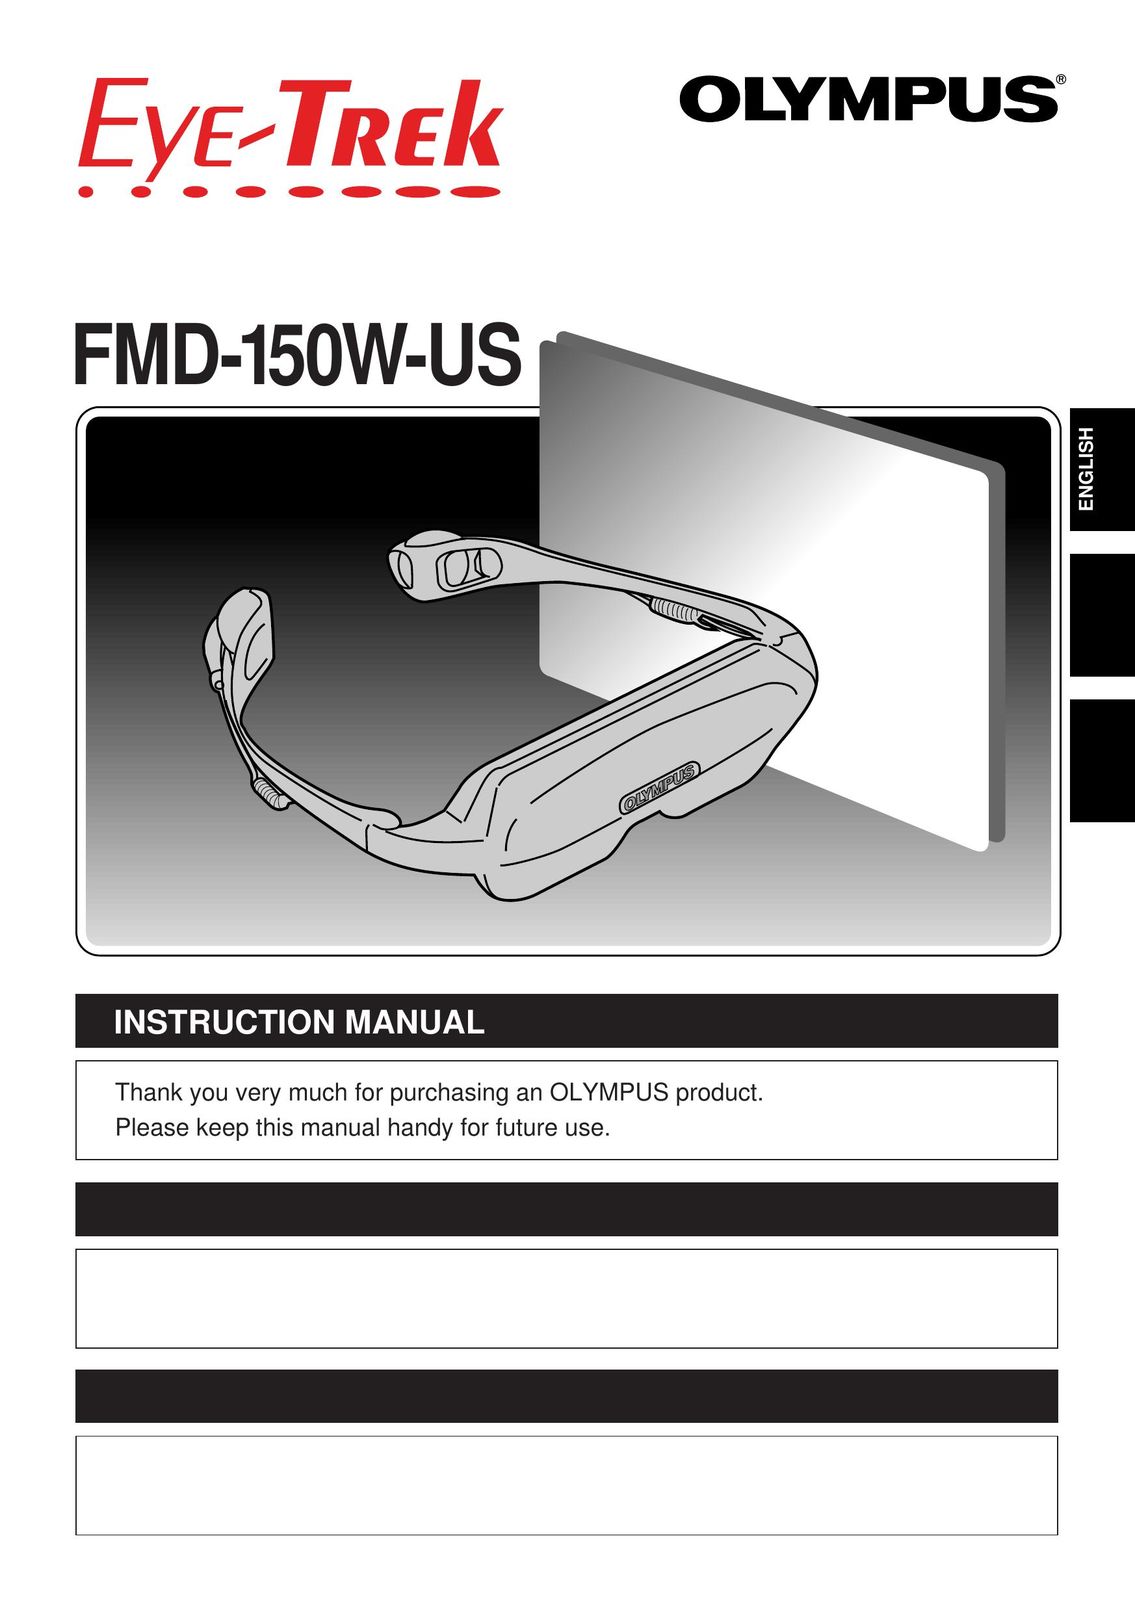 Olympus FMD-150W-US Video Eyeware User Manual